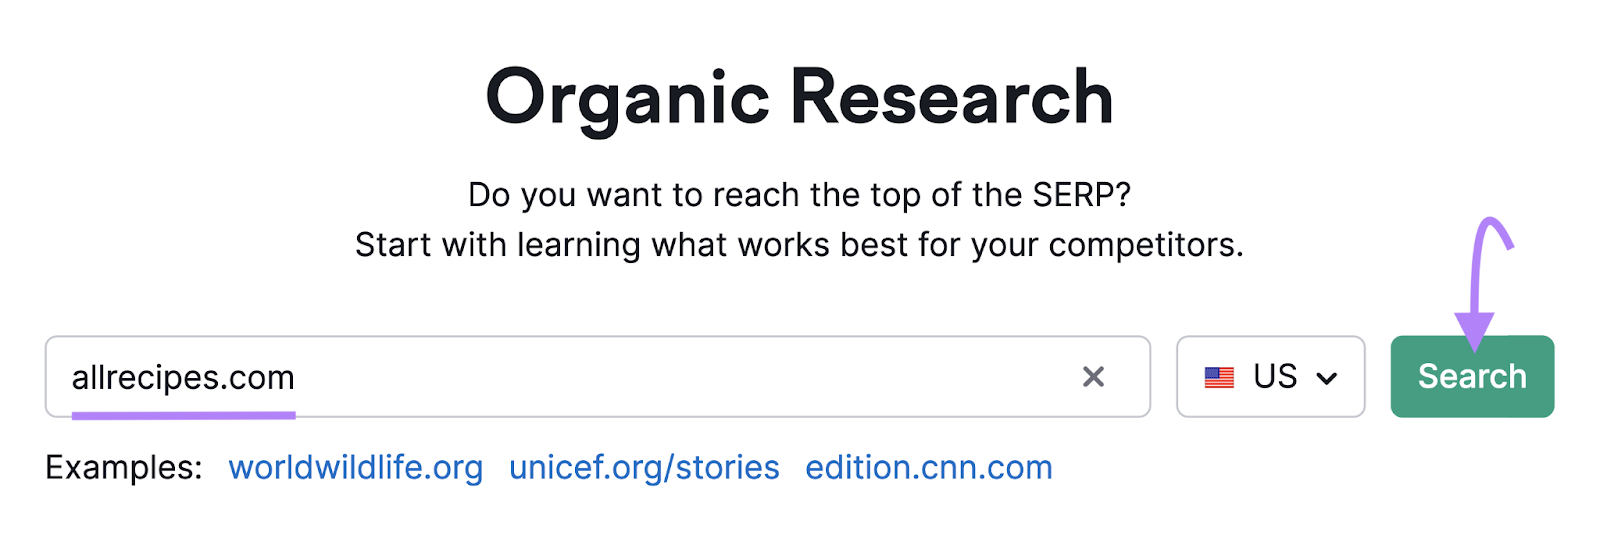 "allrecipes.com" entered into the Organic Research hunt  bar